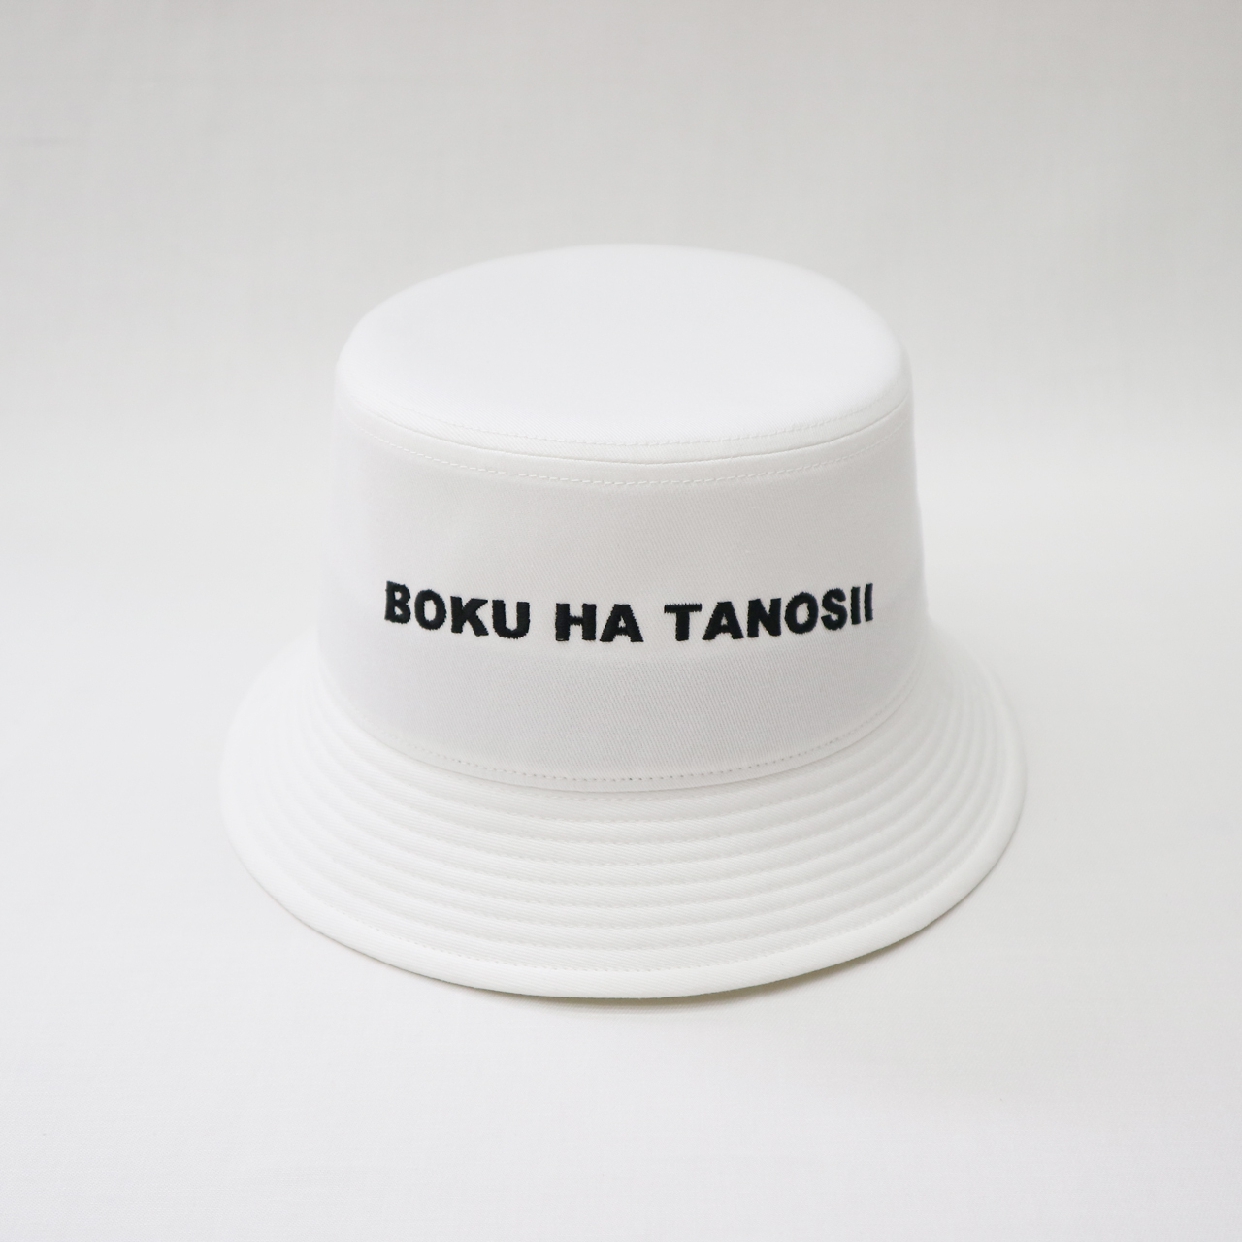 BOKU HA TANOSII(ボクハタノシイ) BOKUTANO BUCKET HAT ホワイトの商品画像2 